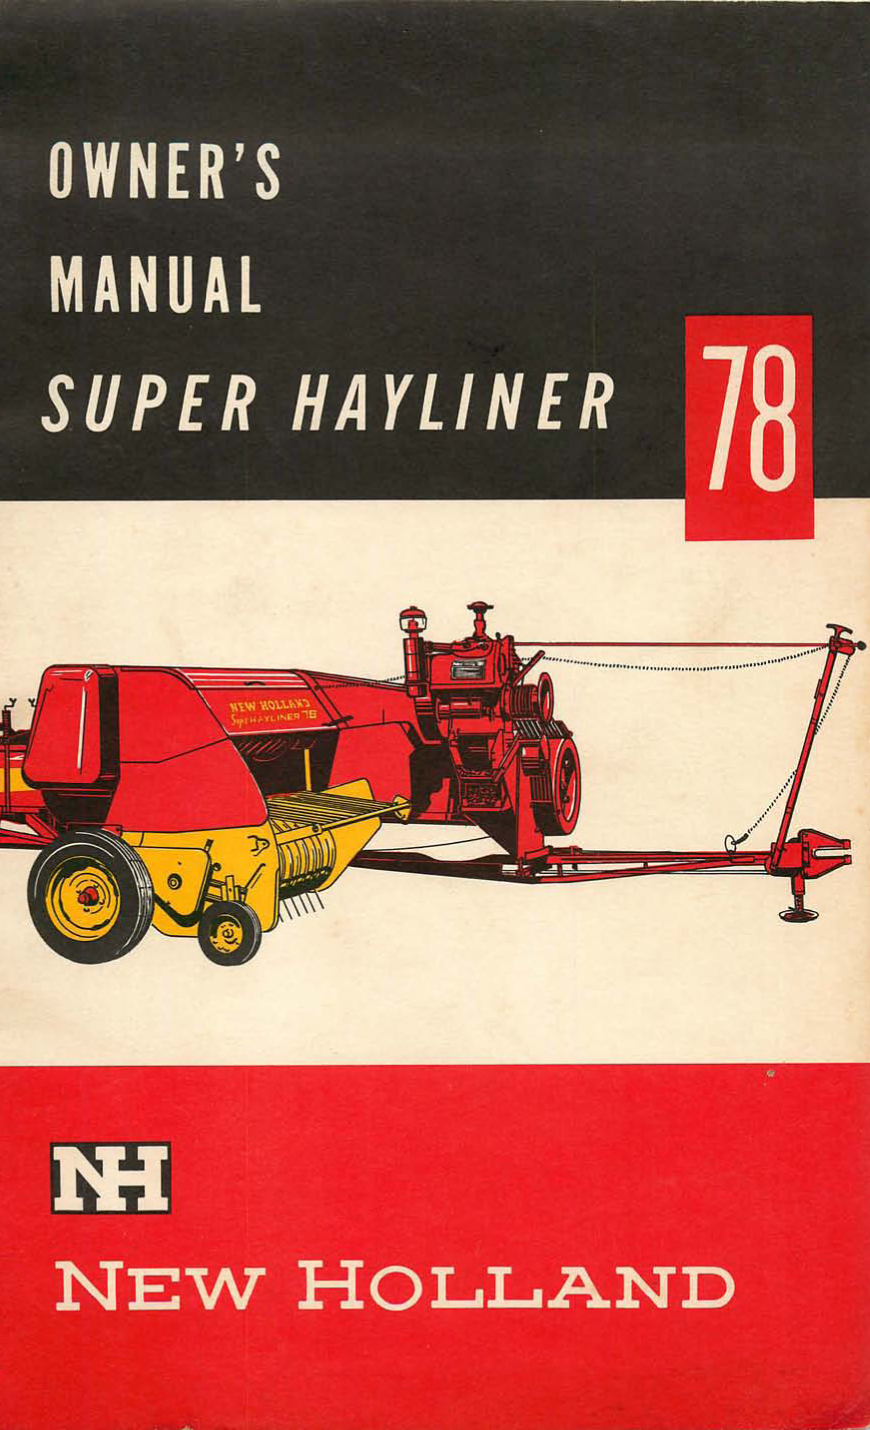 New Holland Super Hayliner 78 Baler - Owner's Manual - Ag Manuals - A Provider of Digital Farm Manuals - 1